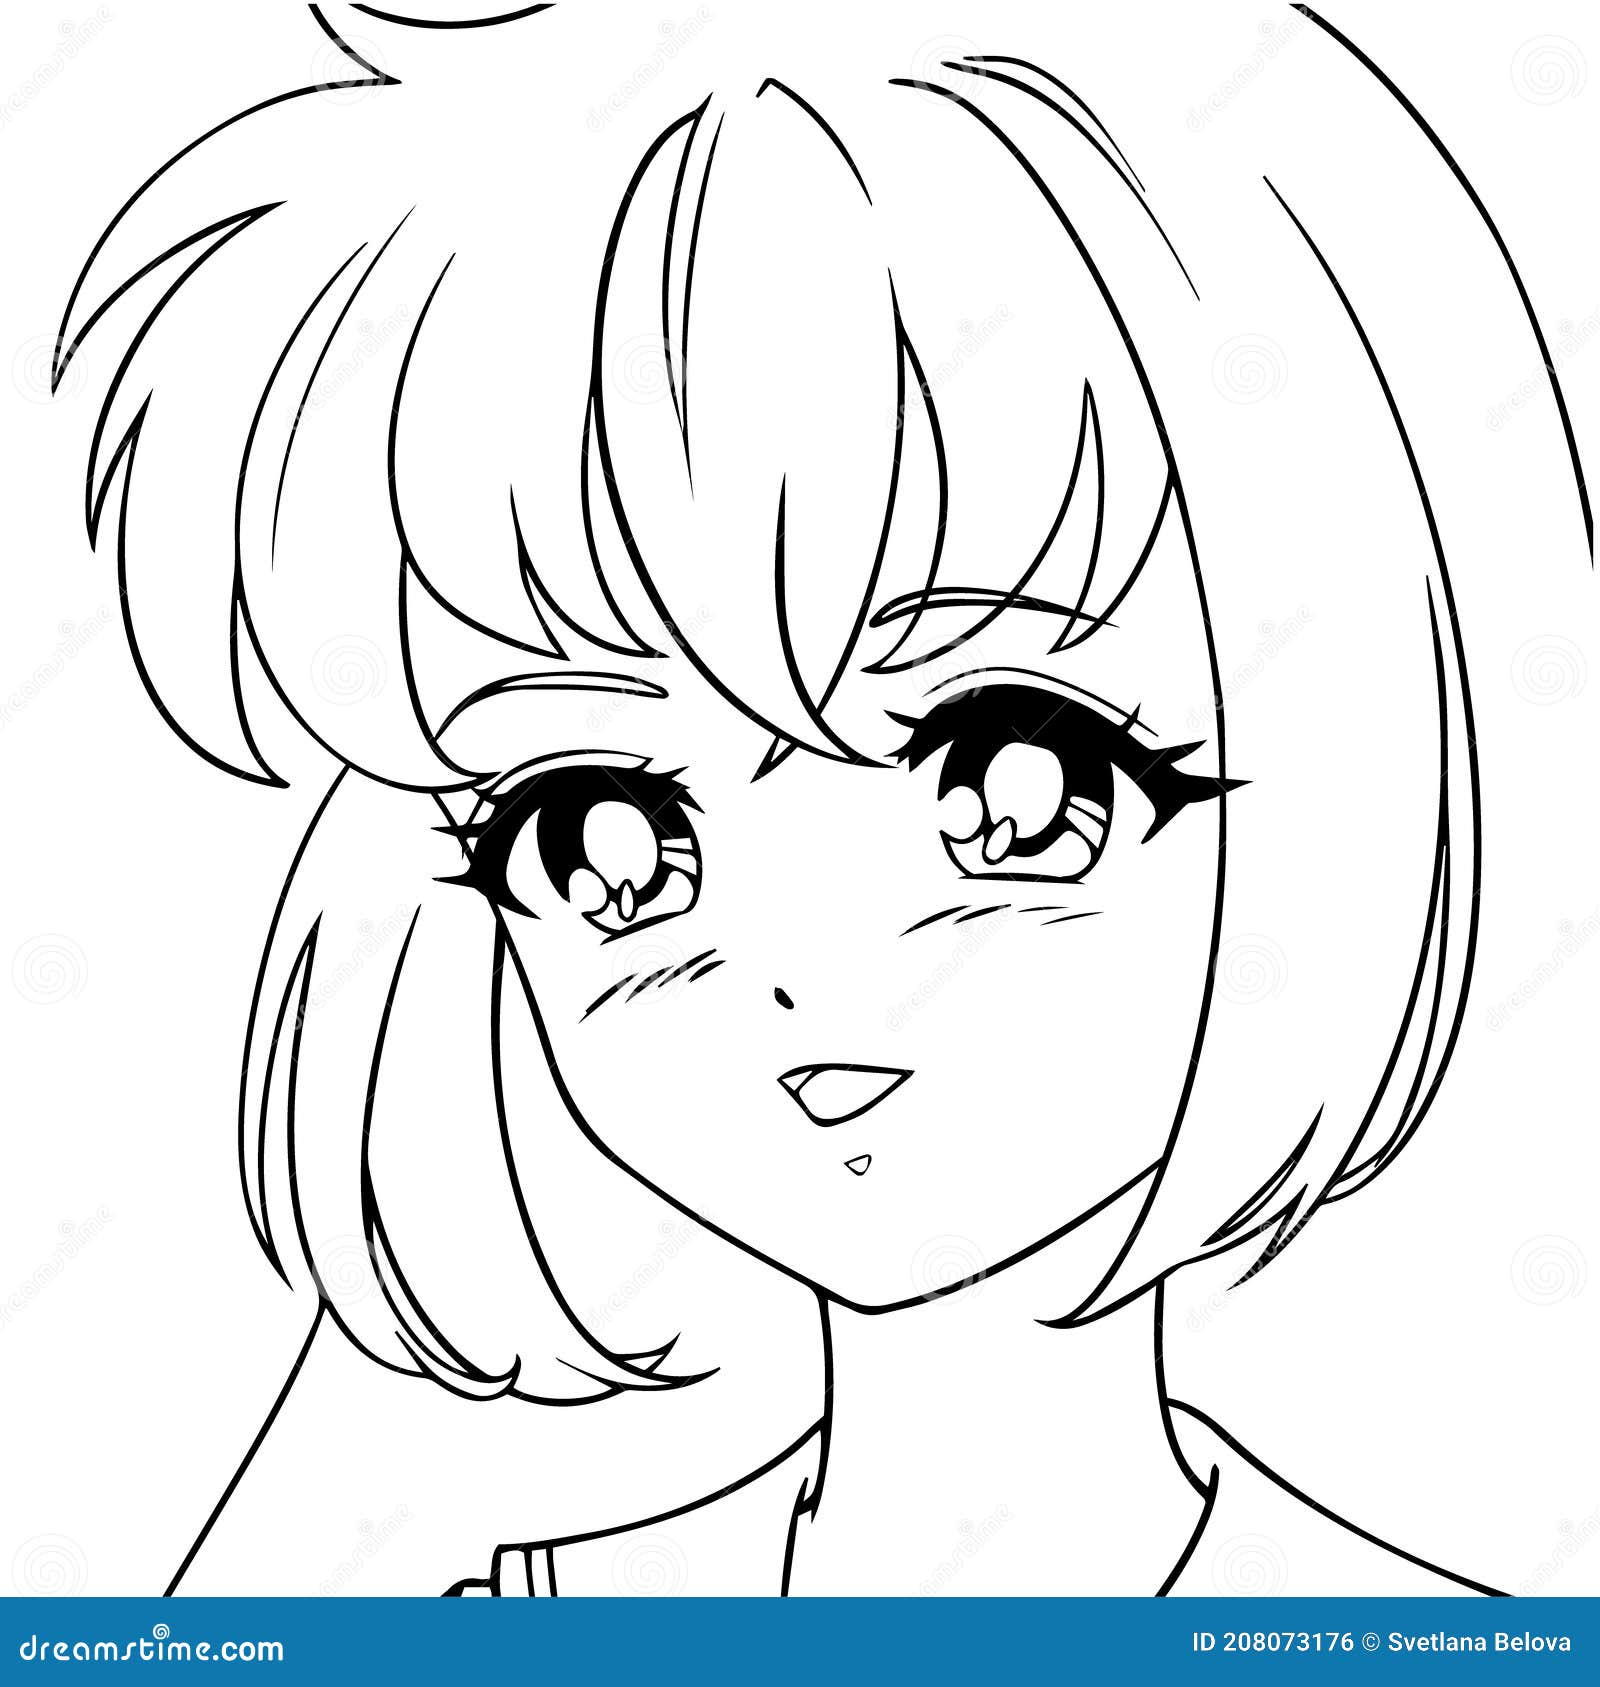 Draw a cute anime icon, avatar, headshot or profile picture by Kirisameneko